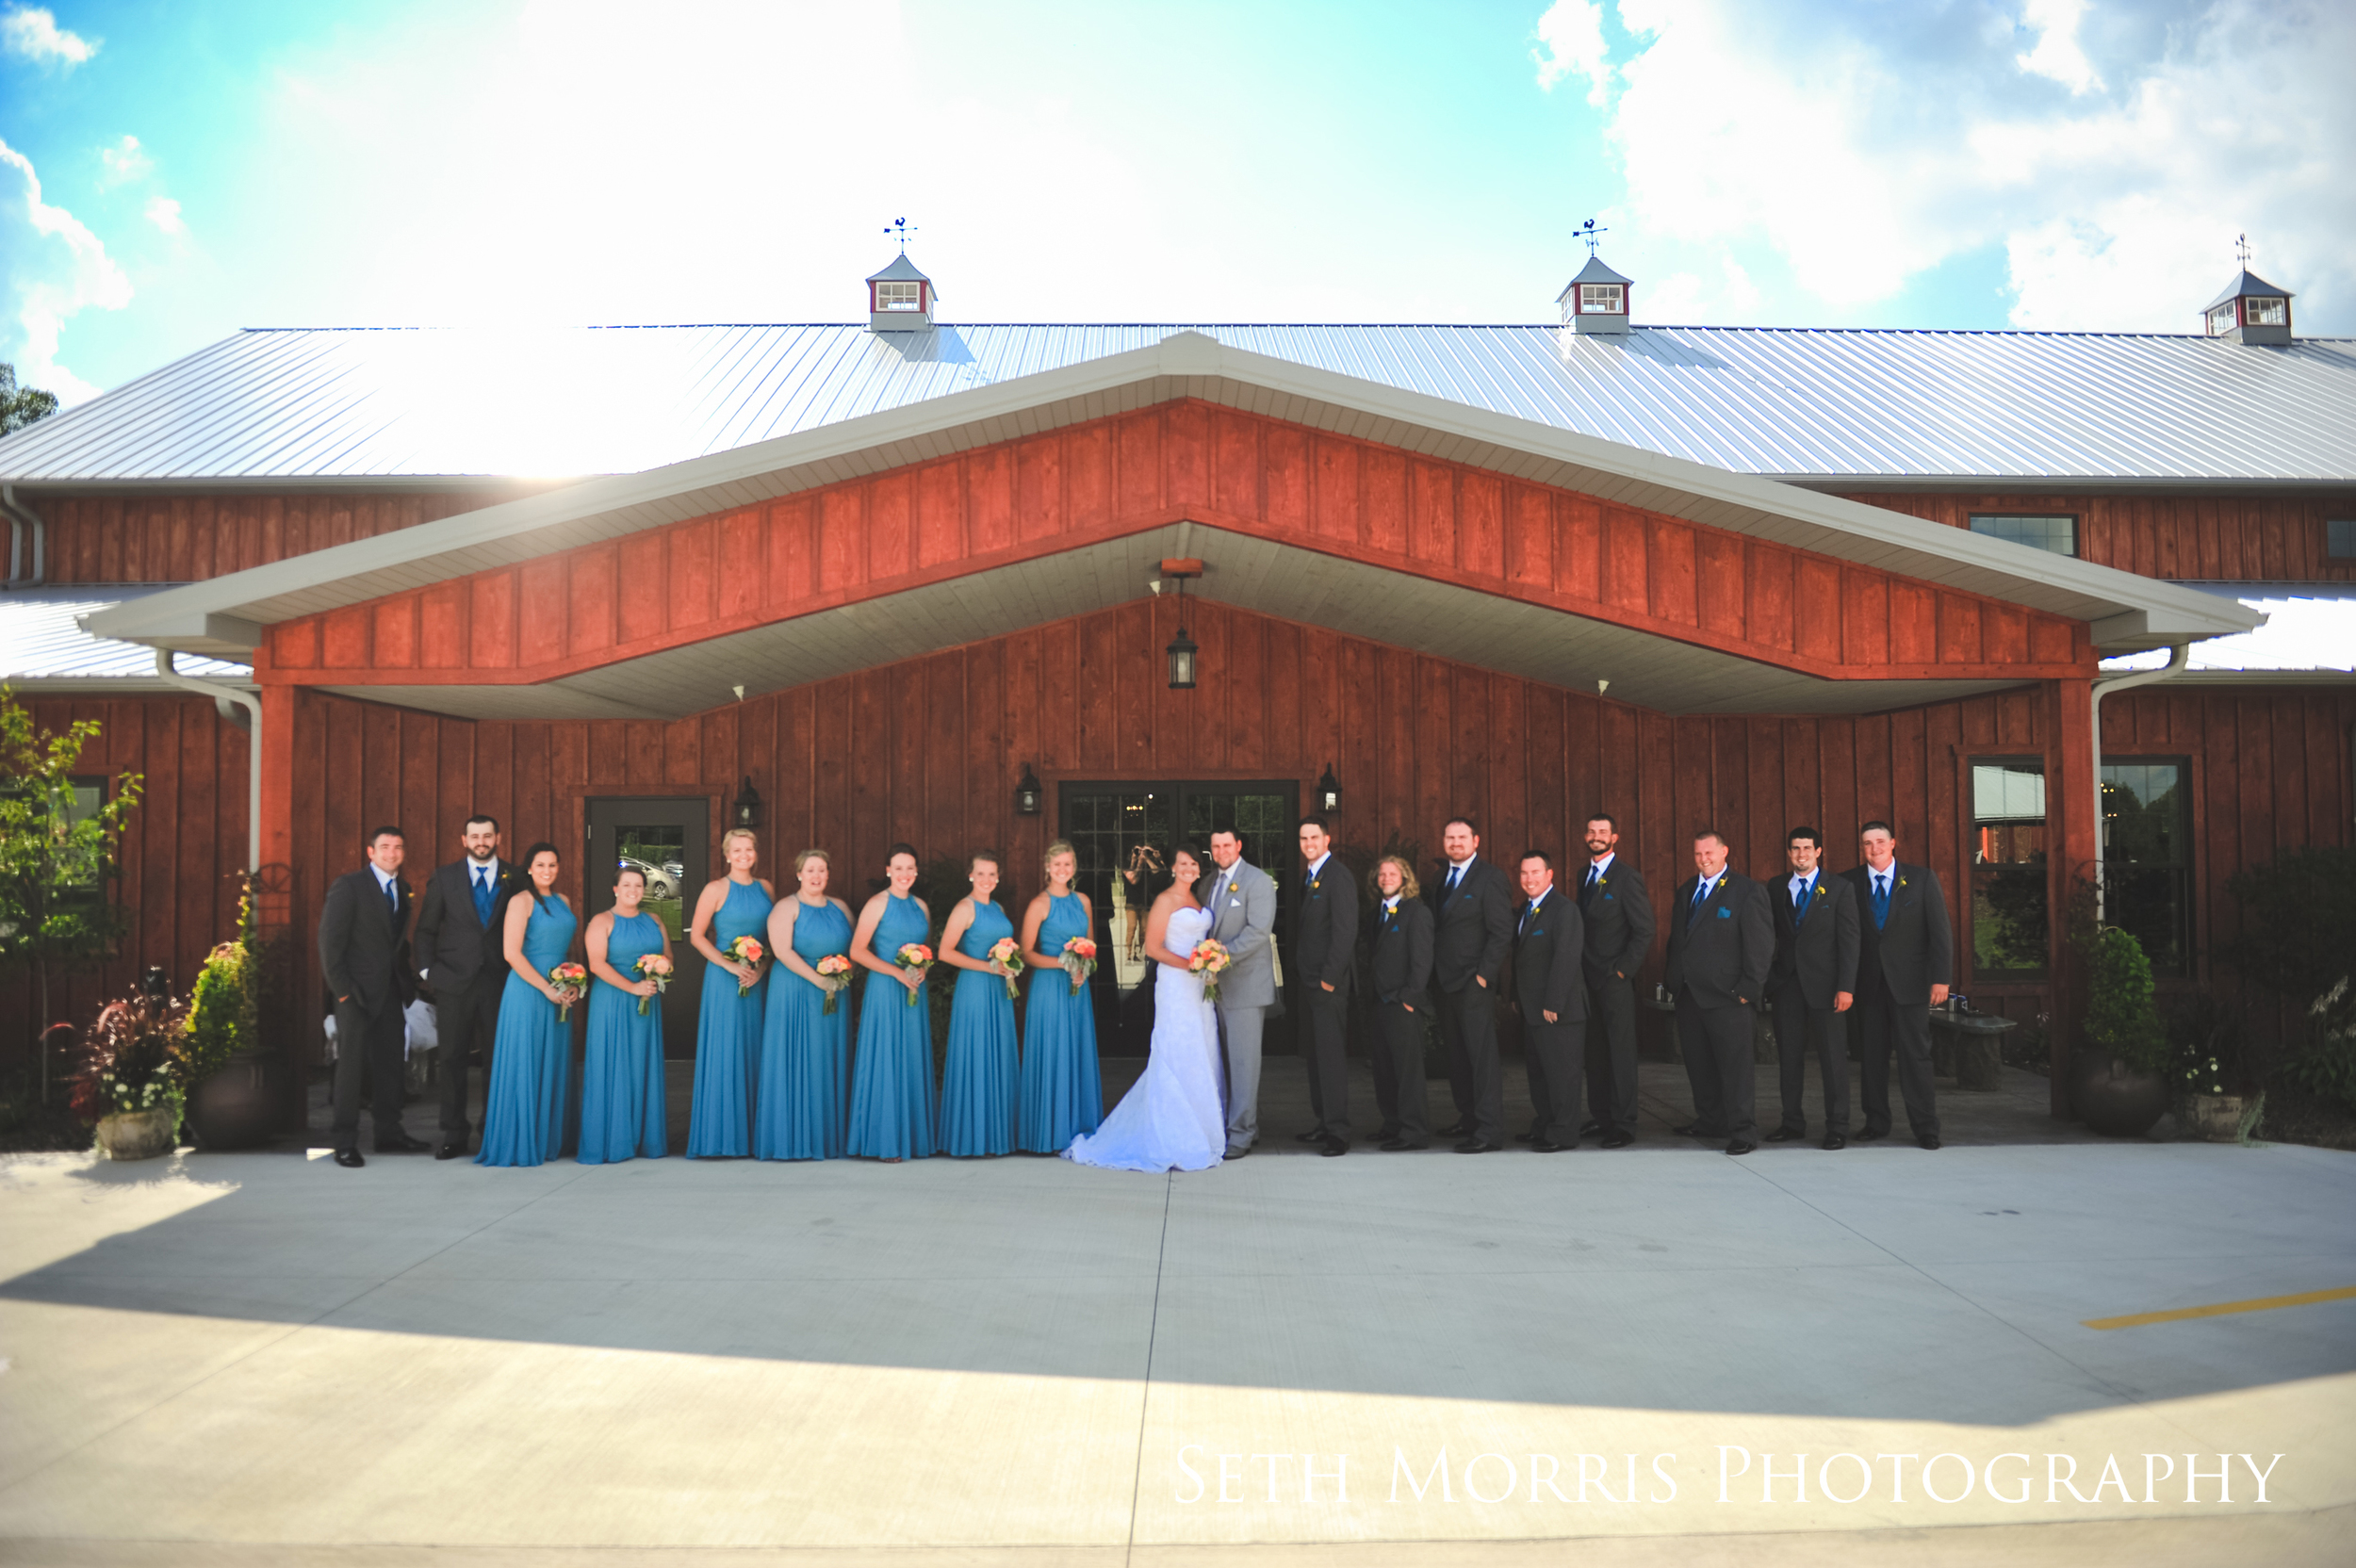 hornbaker-barn-wedding-photo-princeton-photographer-34.jpg